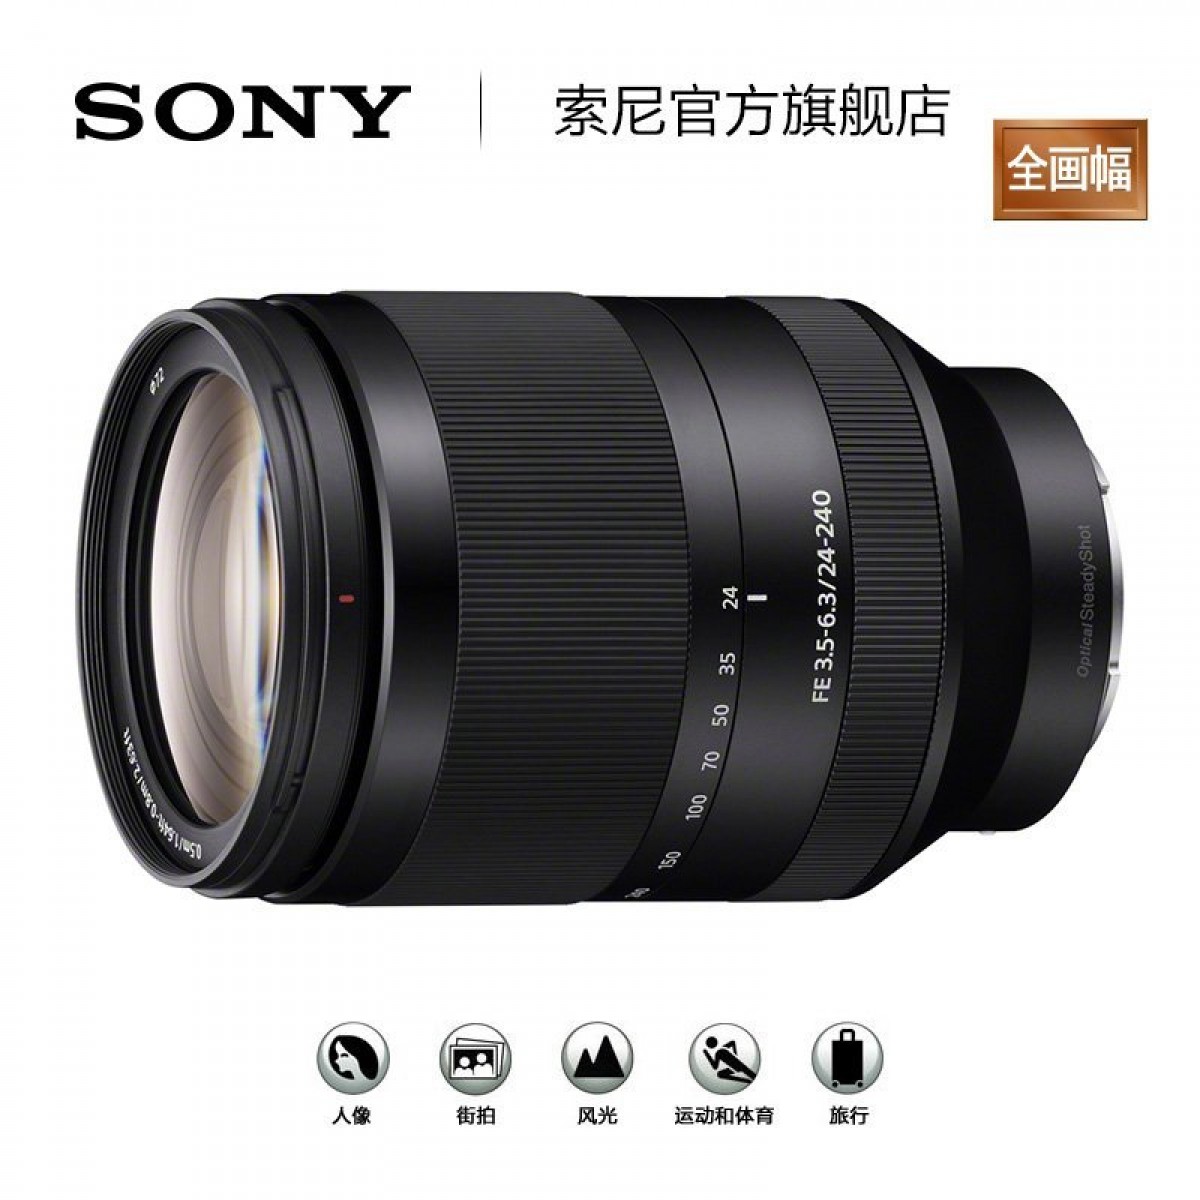 Sony/索尼FE 24-240mmF3.5-6.3 SEL24240 变焦 镜头